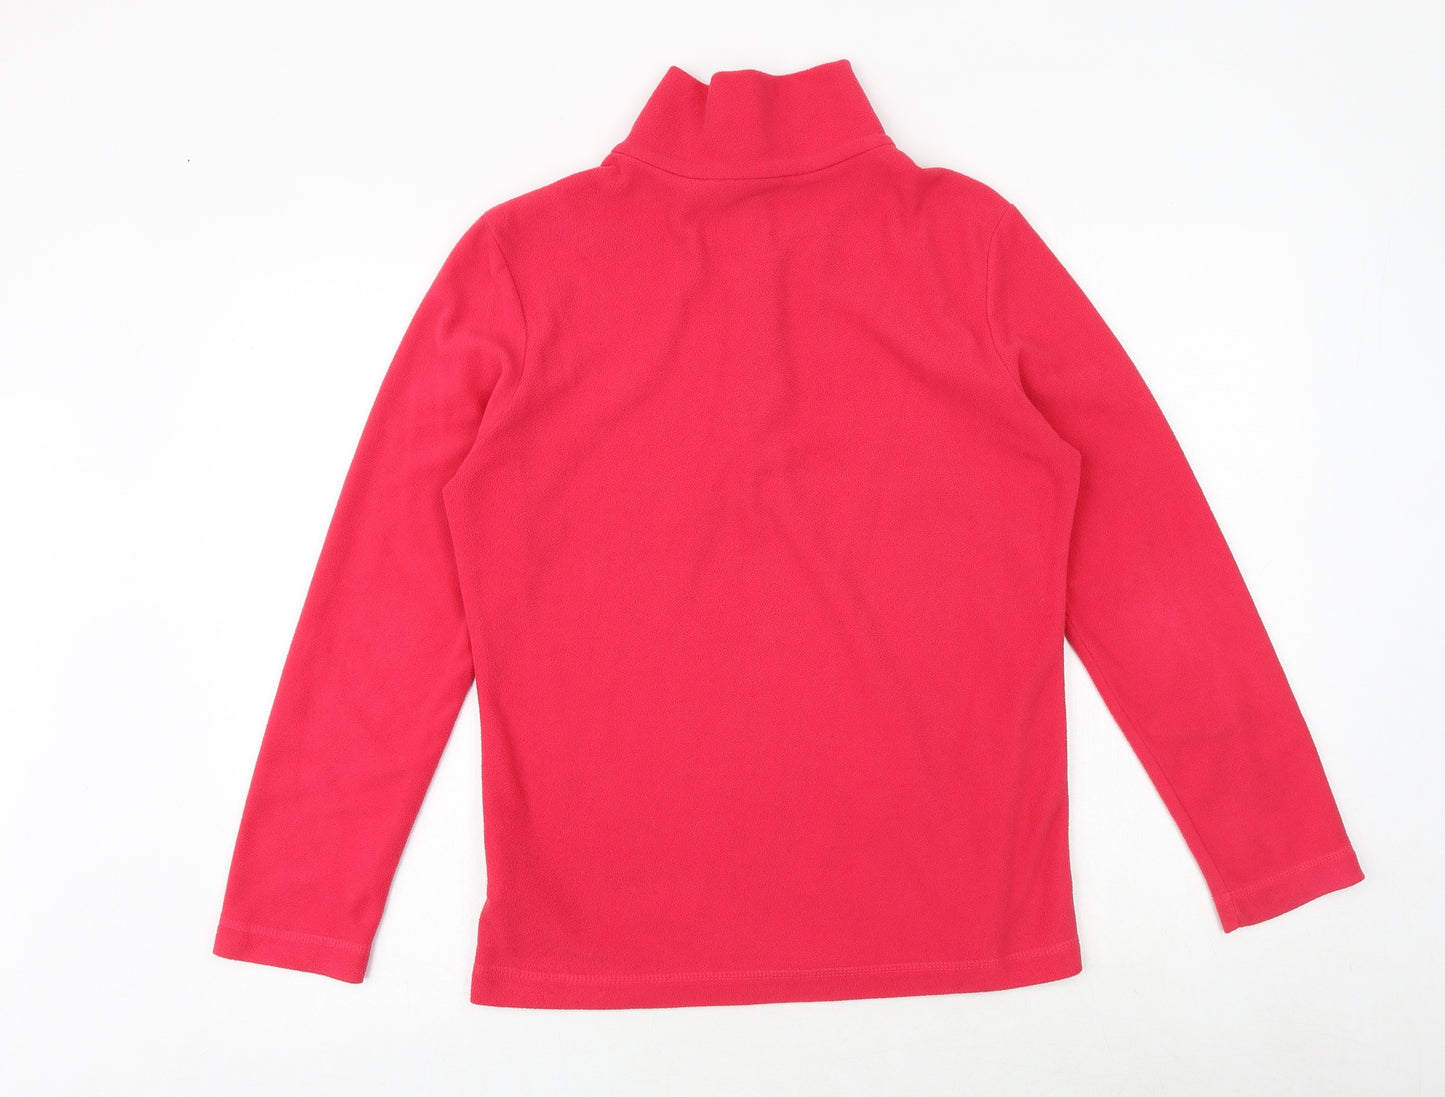 Gelert Womens Pink Polyester Pullover Sweatshirt Size 12 Zip